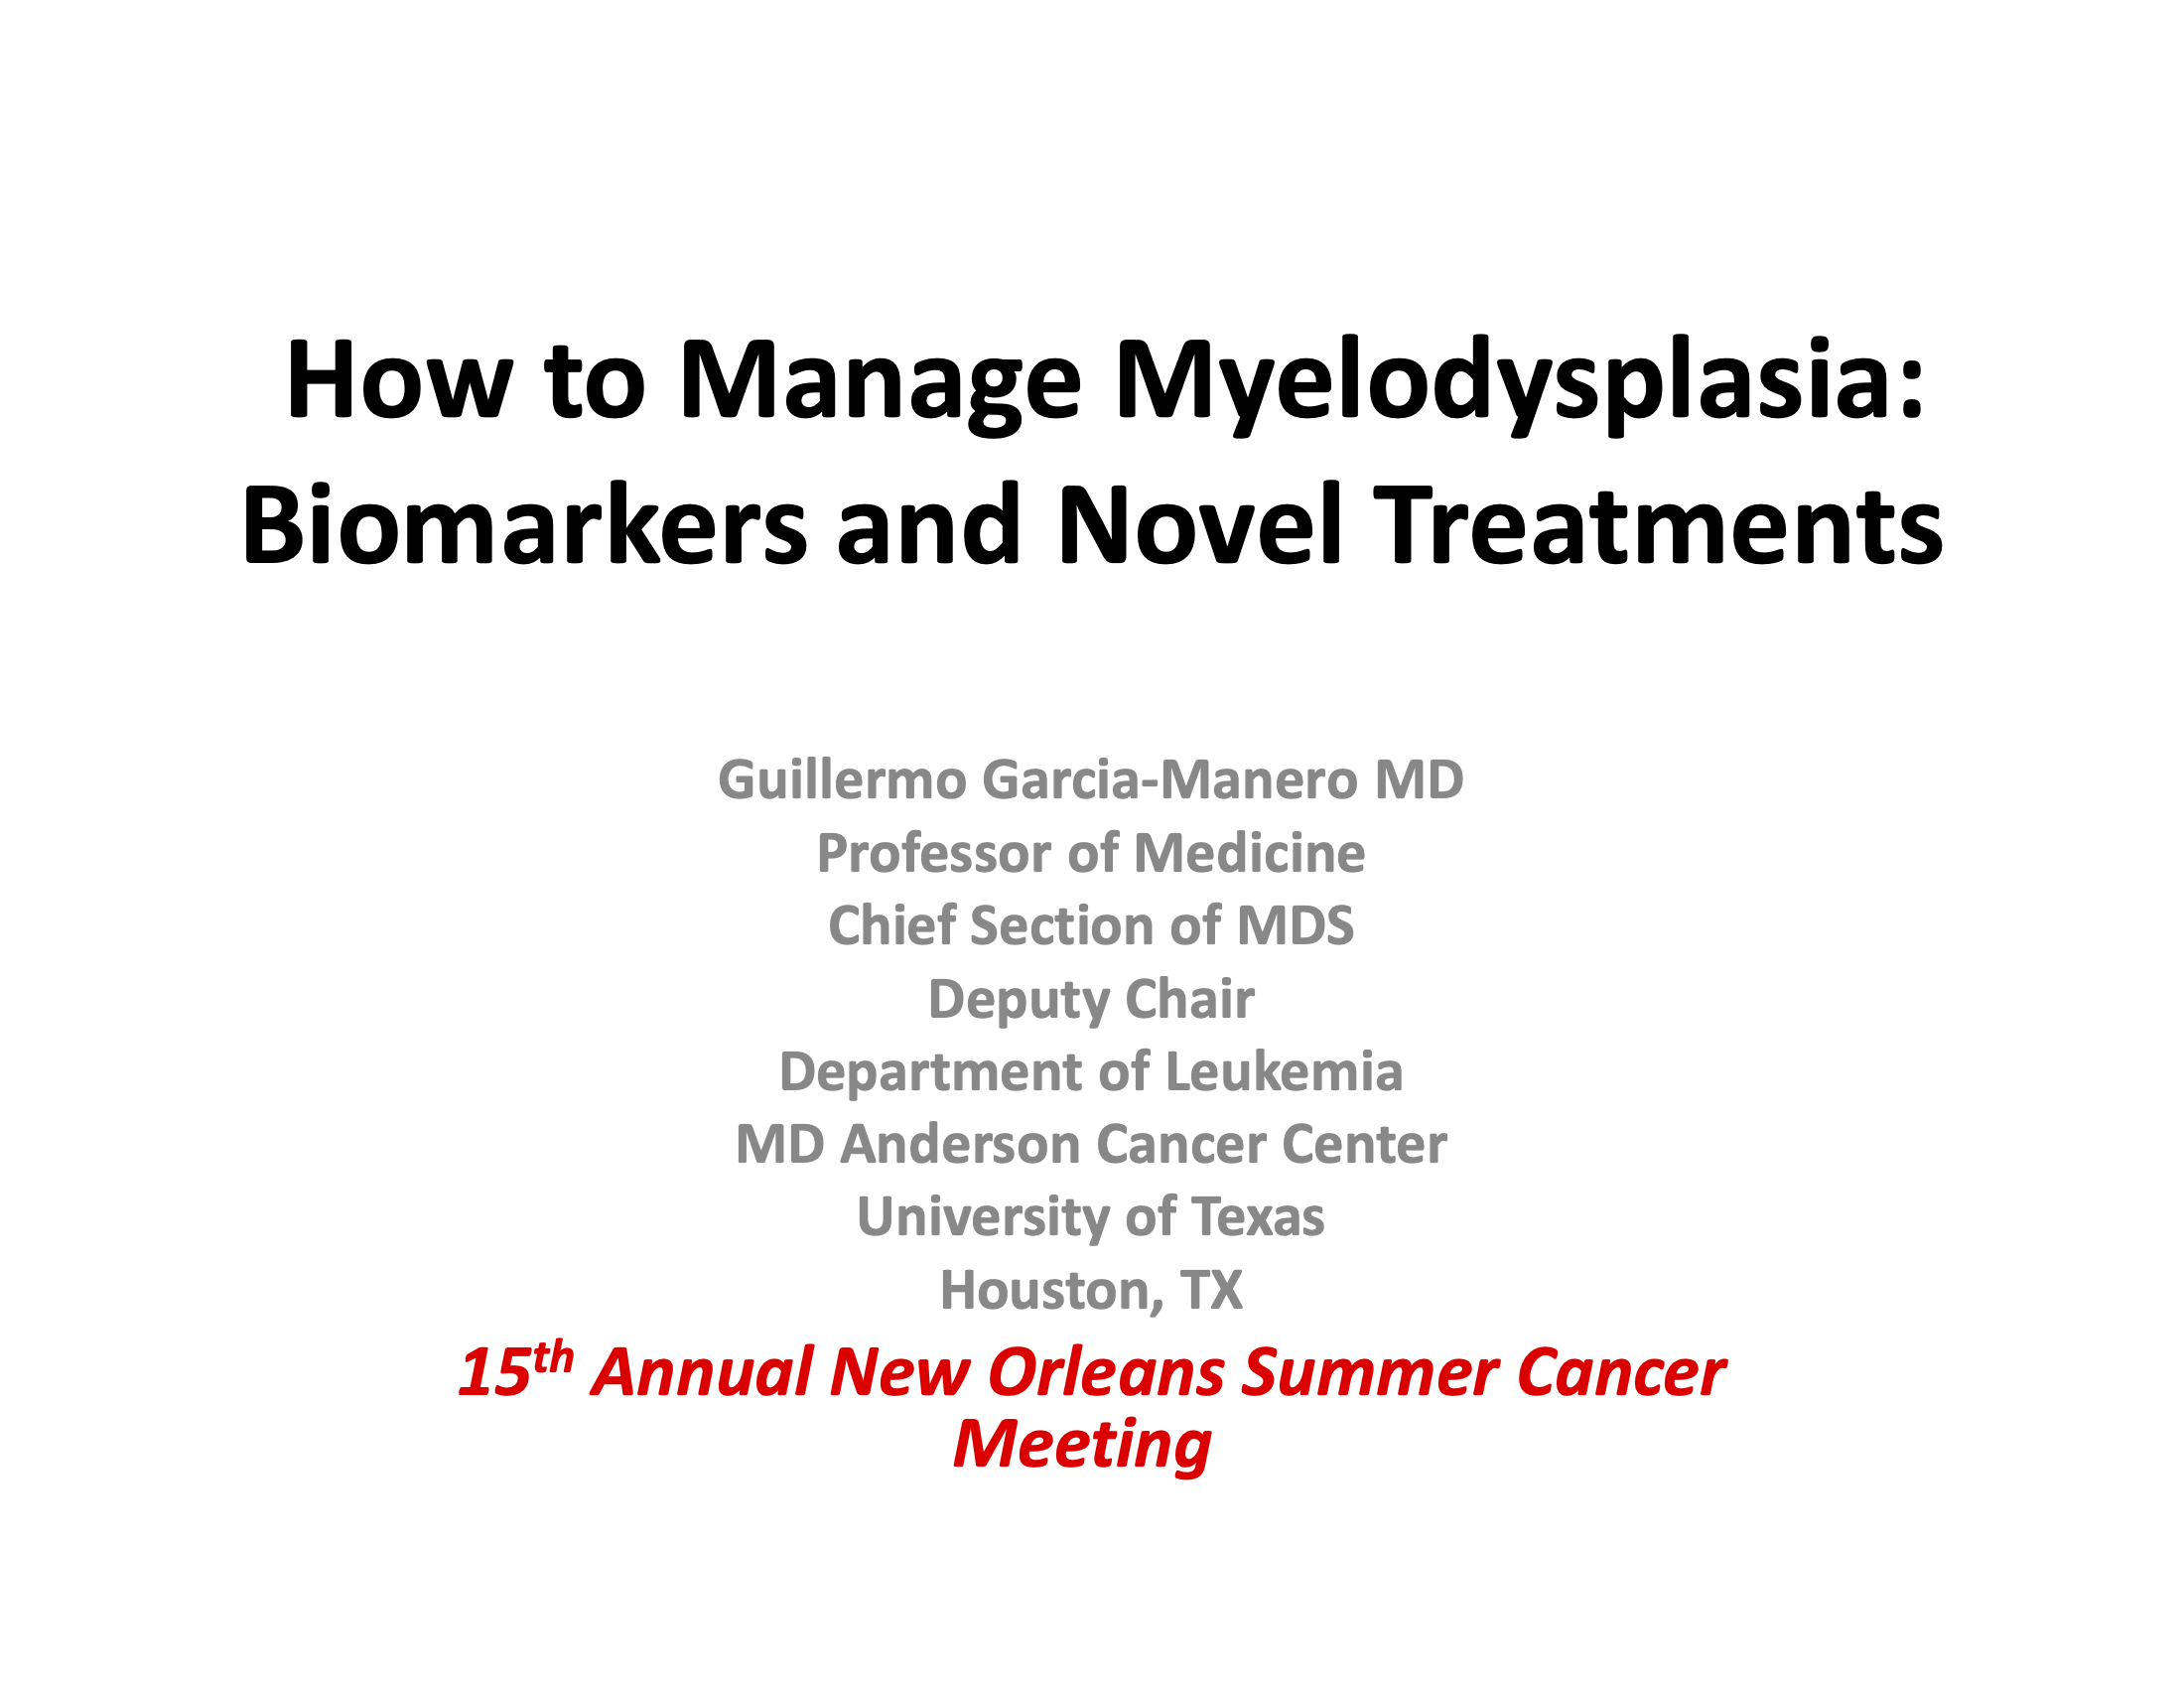 How to Manage Myelodysplasia: Biomarkers and Novel Treatments